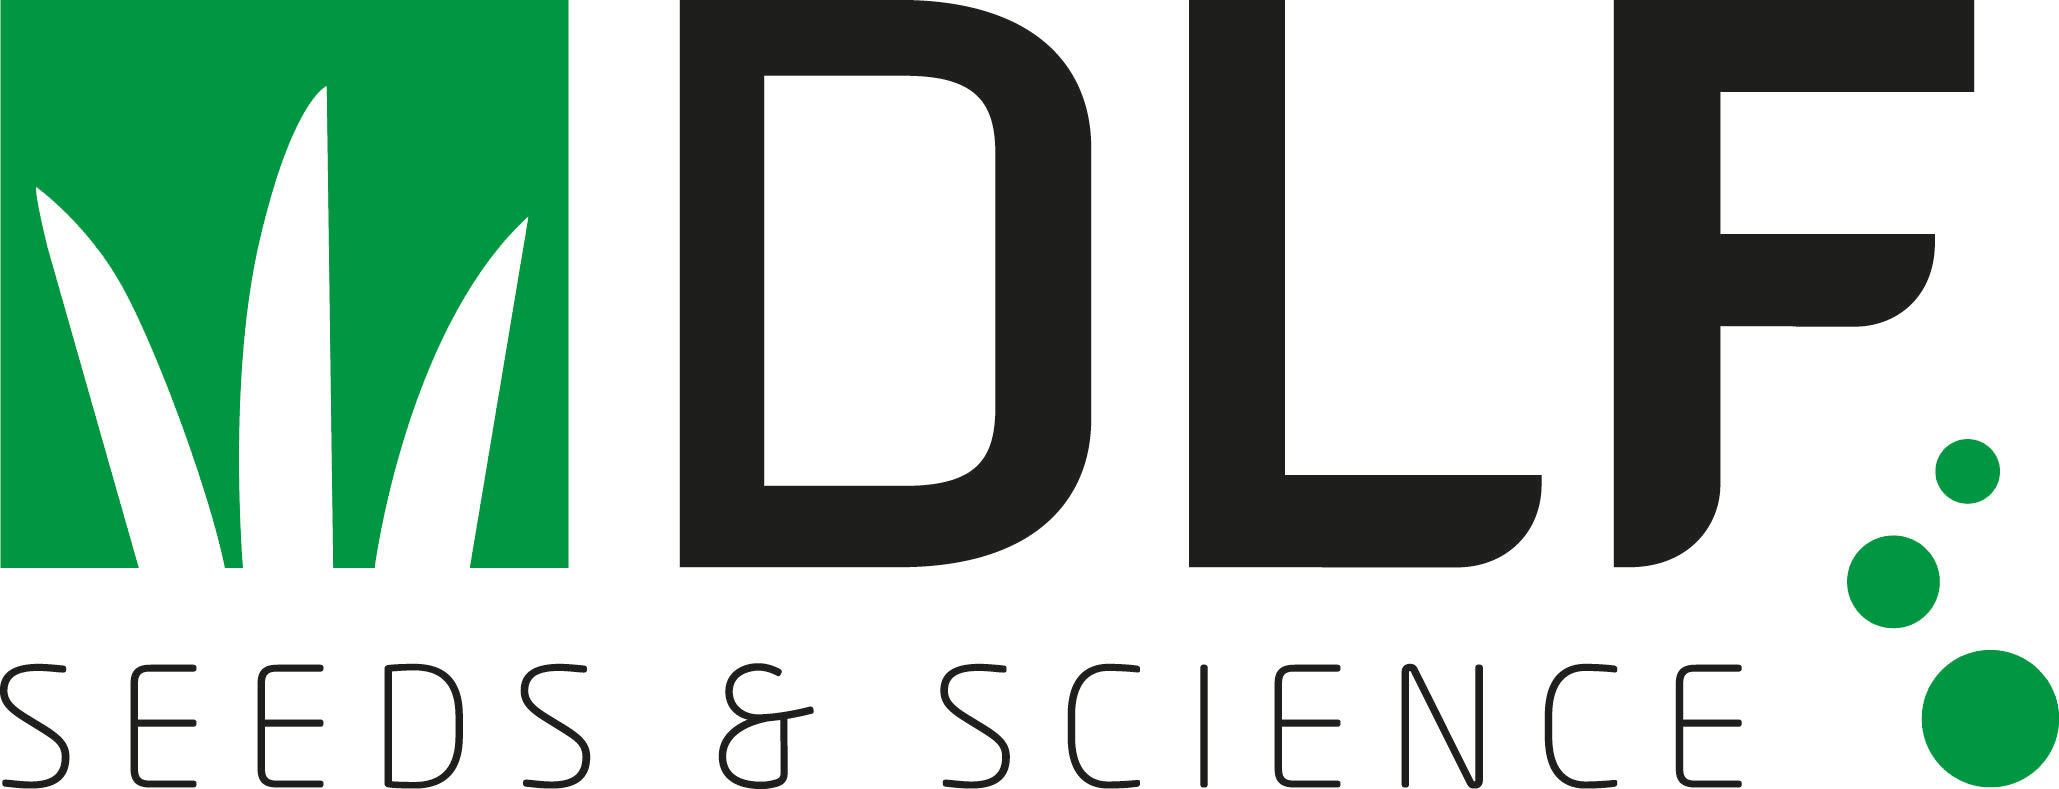 DLF India Channel Partner | New Delhi